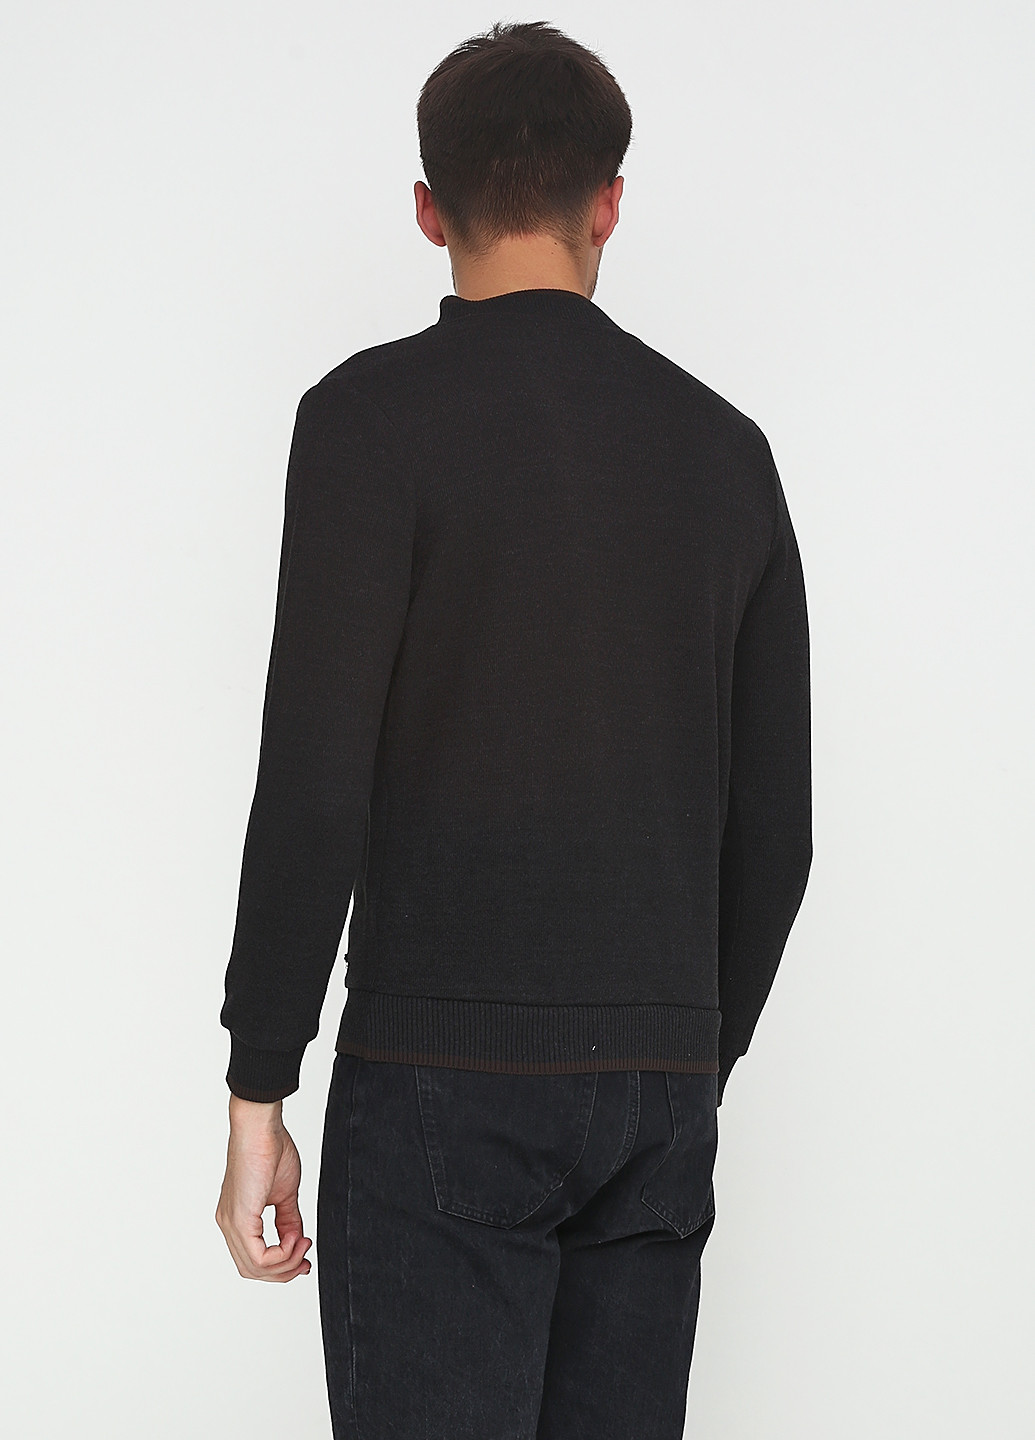 Грифельно-серый демисезонный пуловер пуловер Le Gutti